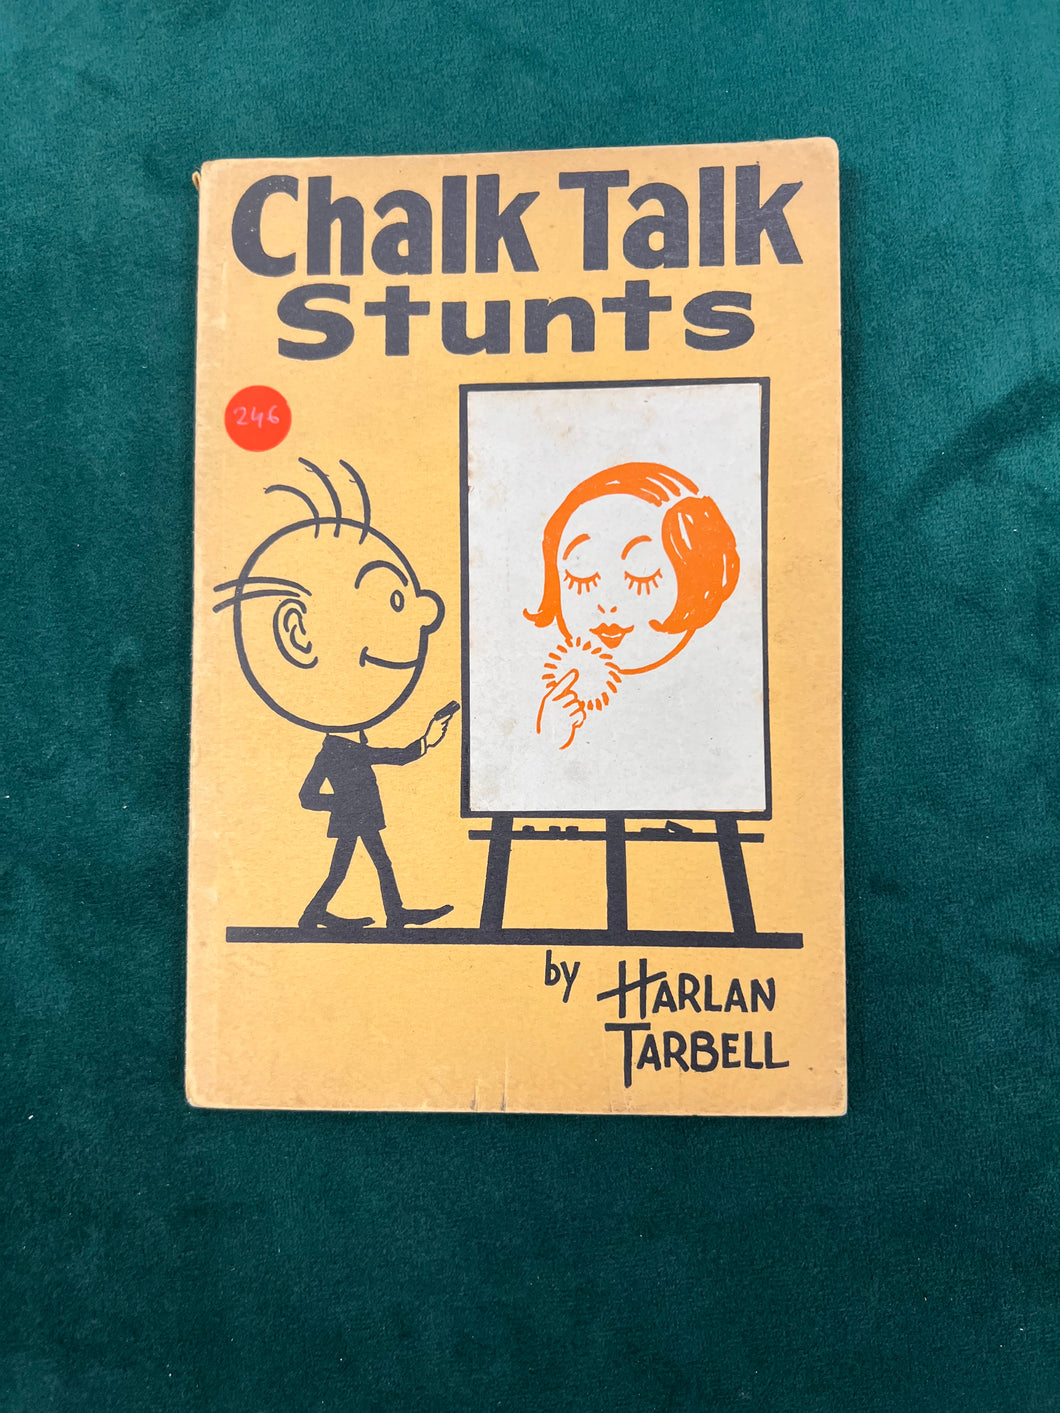 Chalk Talk Stunts by Harlan Tarbell